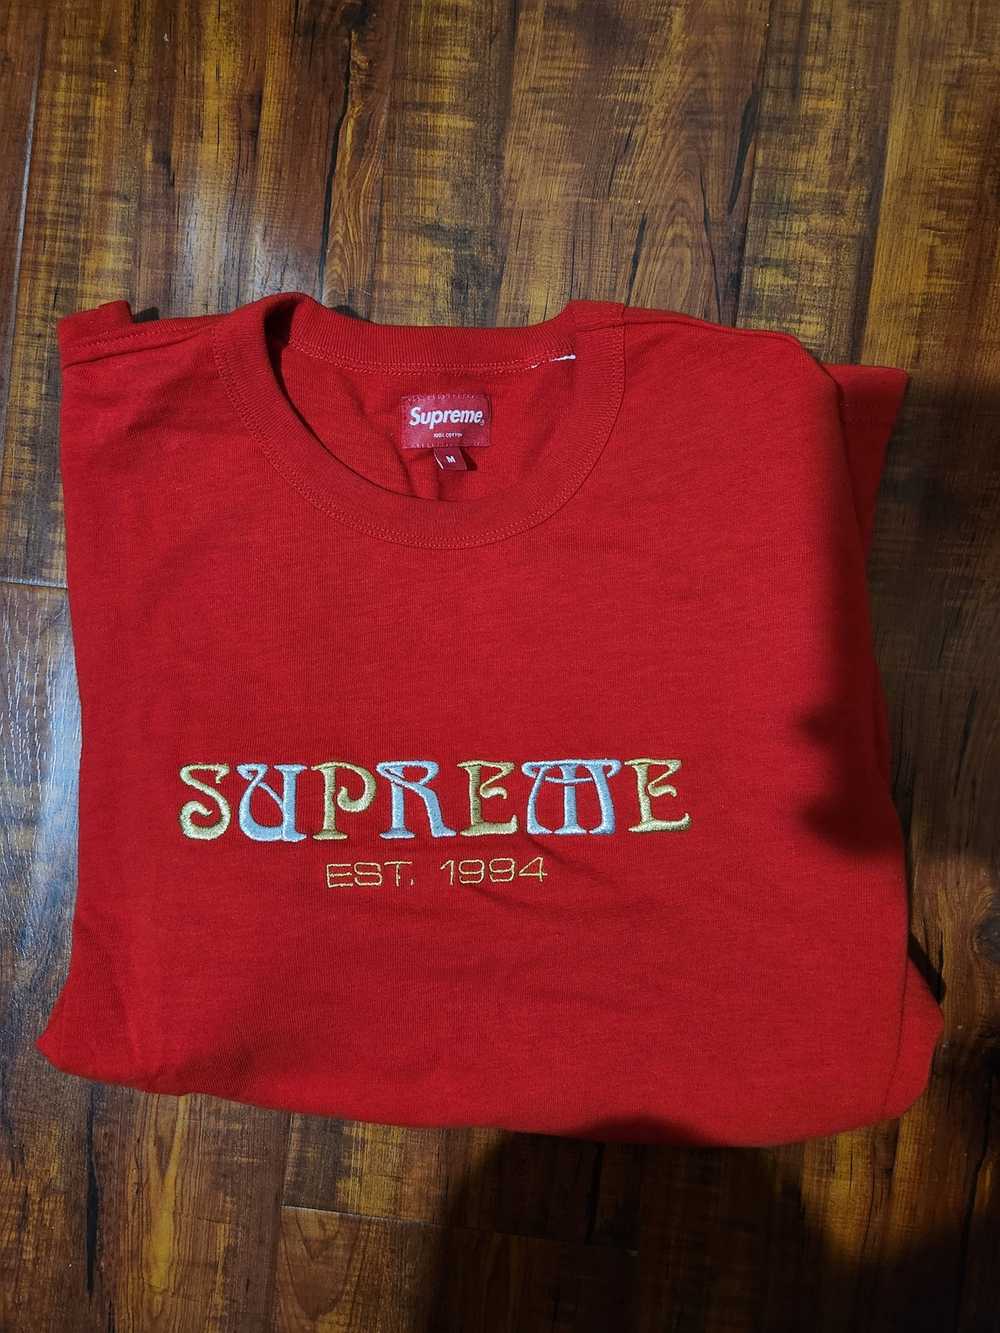 Supreme Supreme Nouveau Logo T shirt - image 1